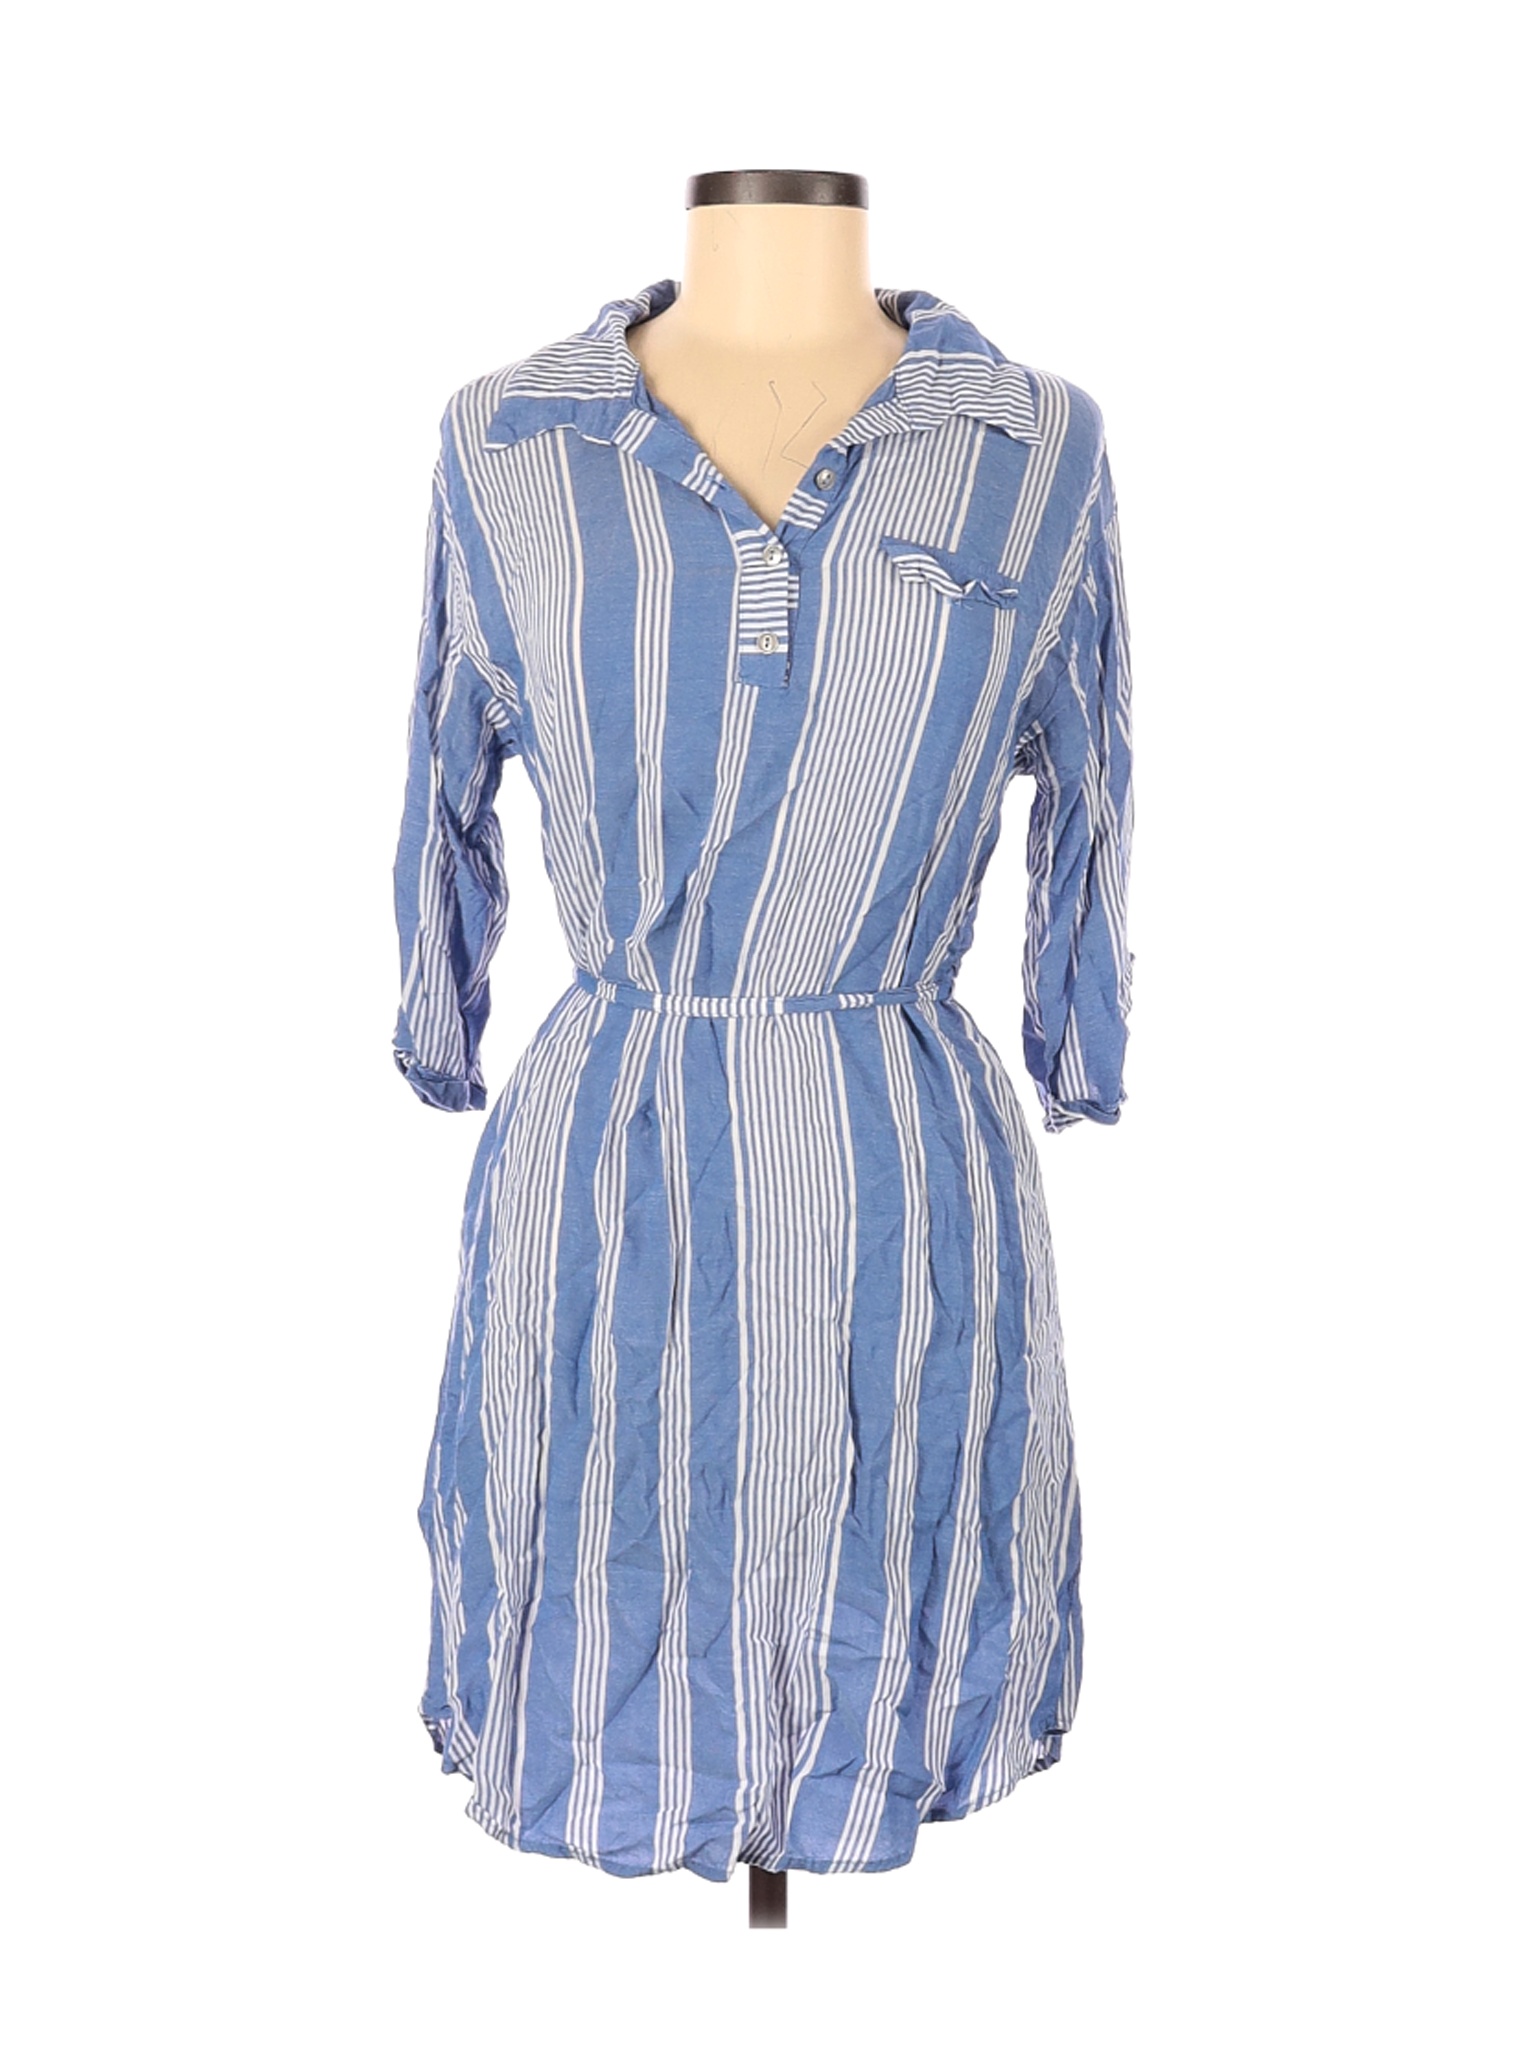 Naif Women Blue Casual Dress M | eBay